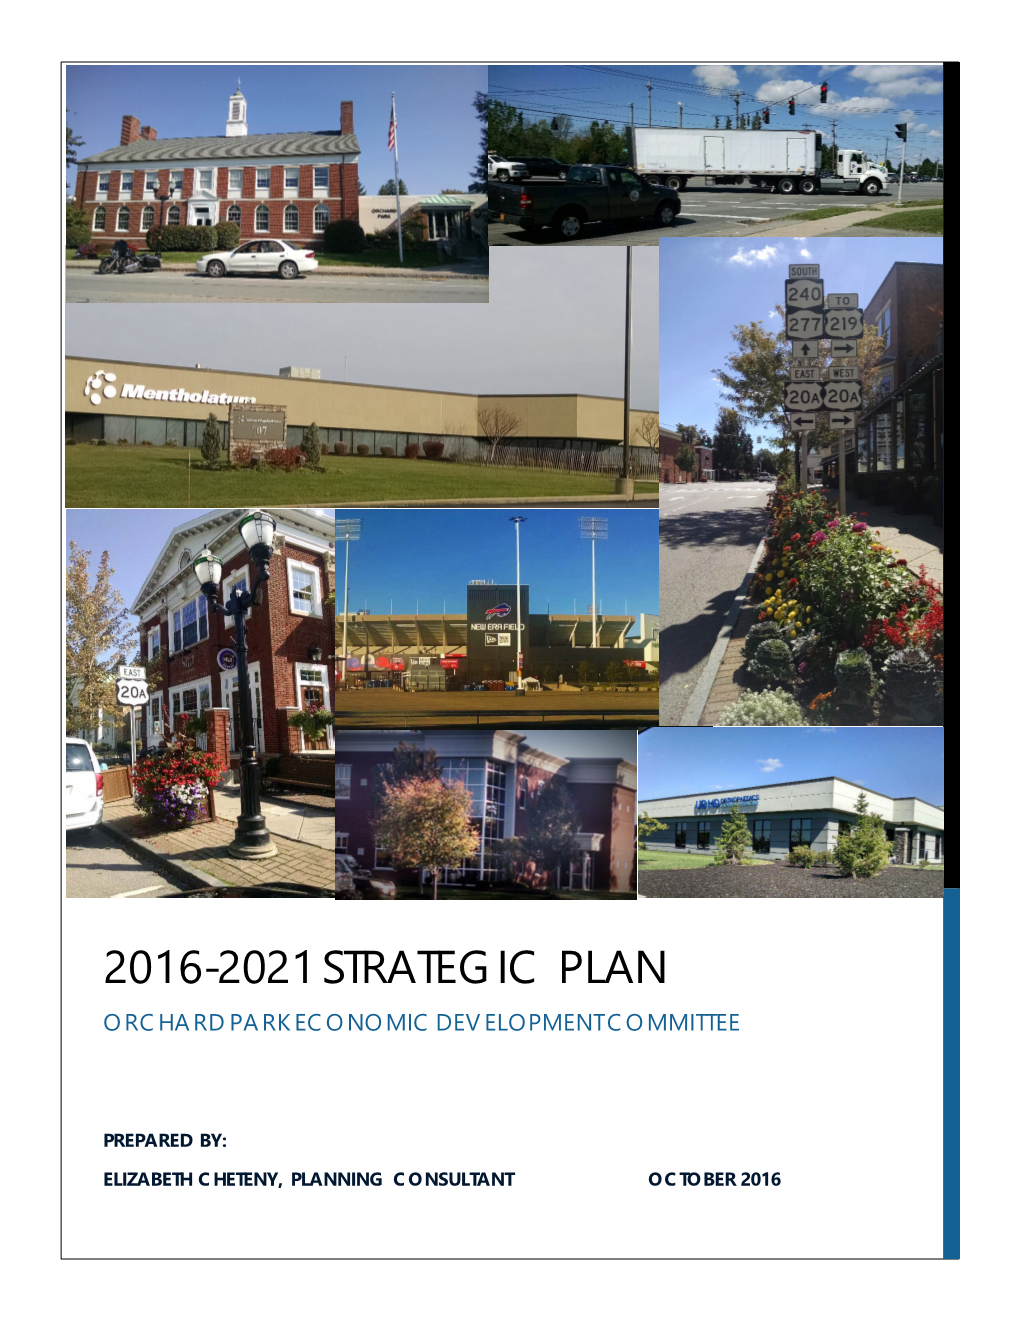 Orchard Park Economic Development Committee Strategic Plan for 2016-2021